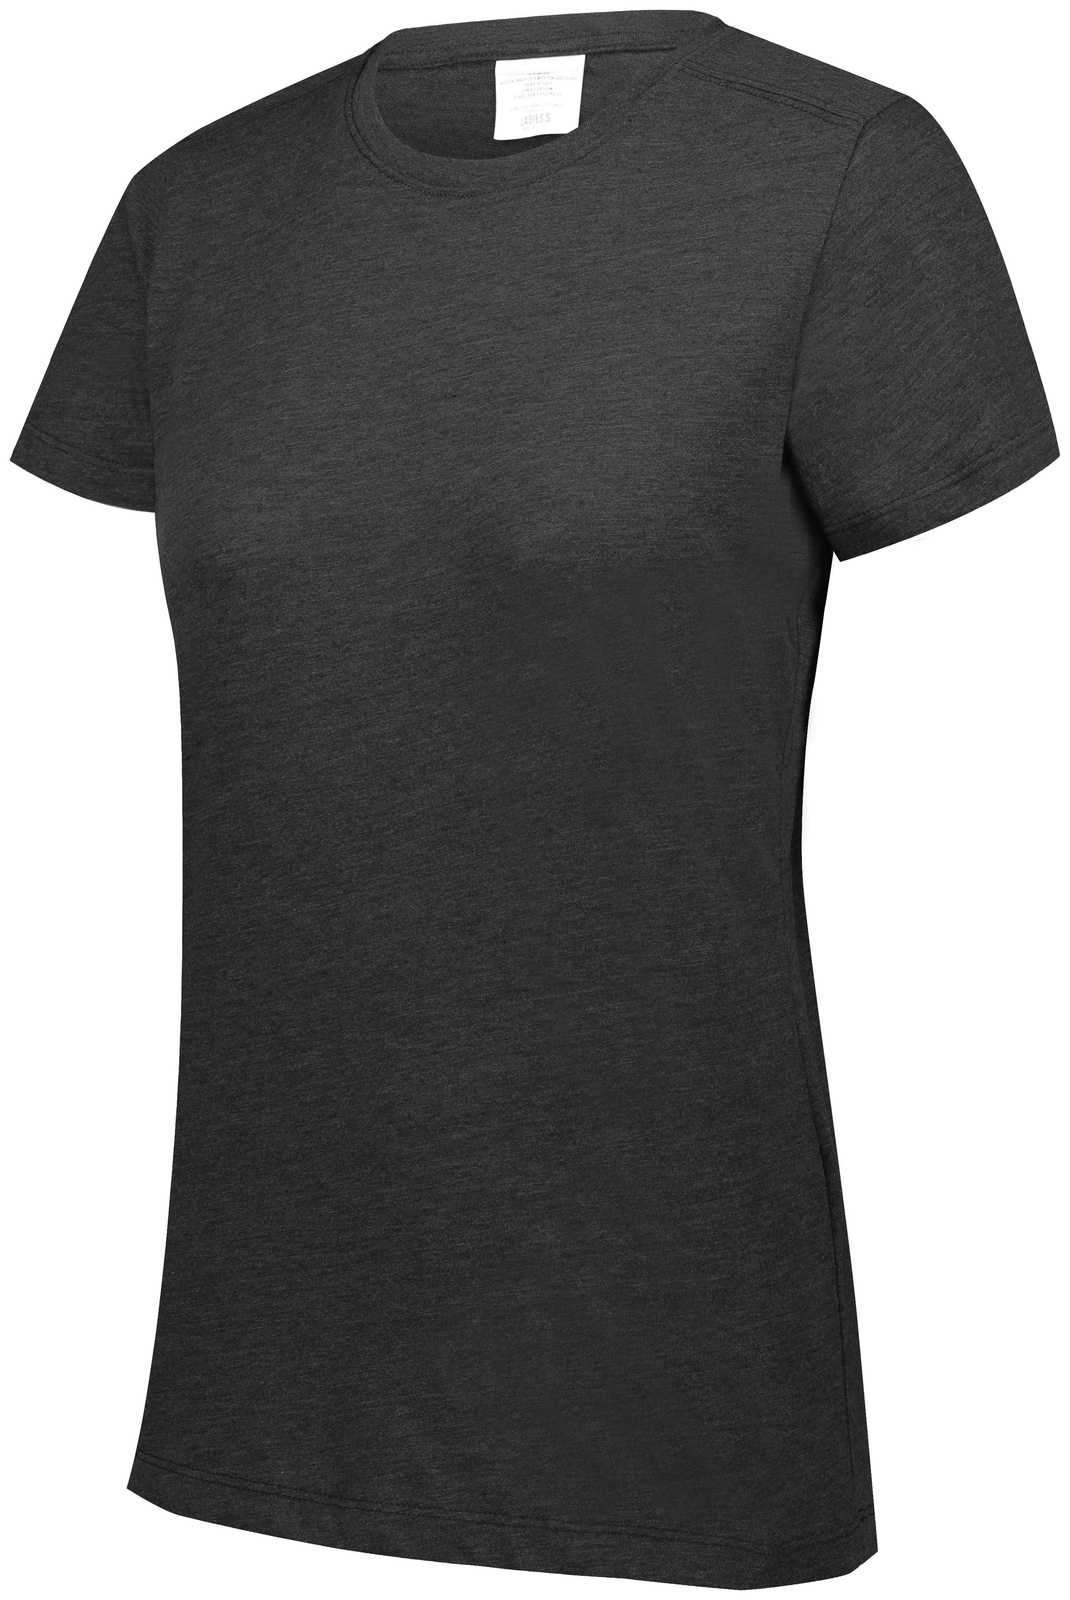 Augusta 3067 Ladies Tri-Blend T-Shirt - Black Heather - HIT a Double